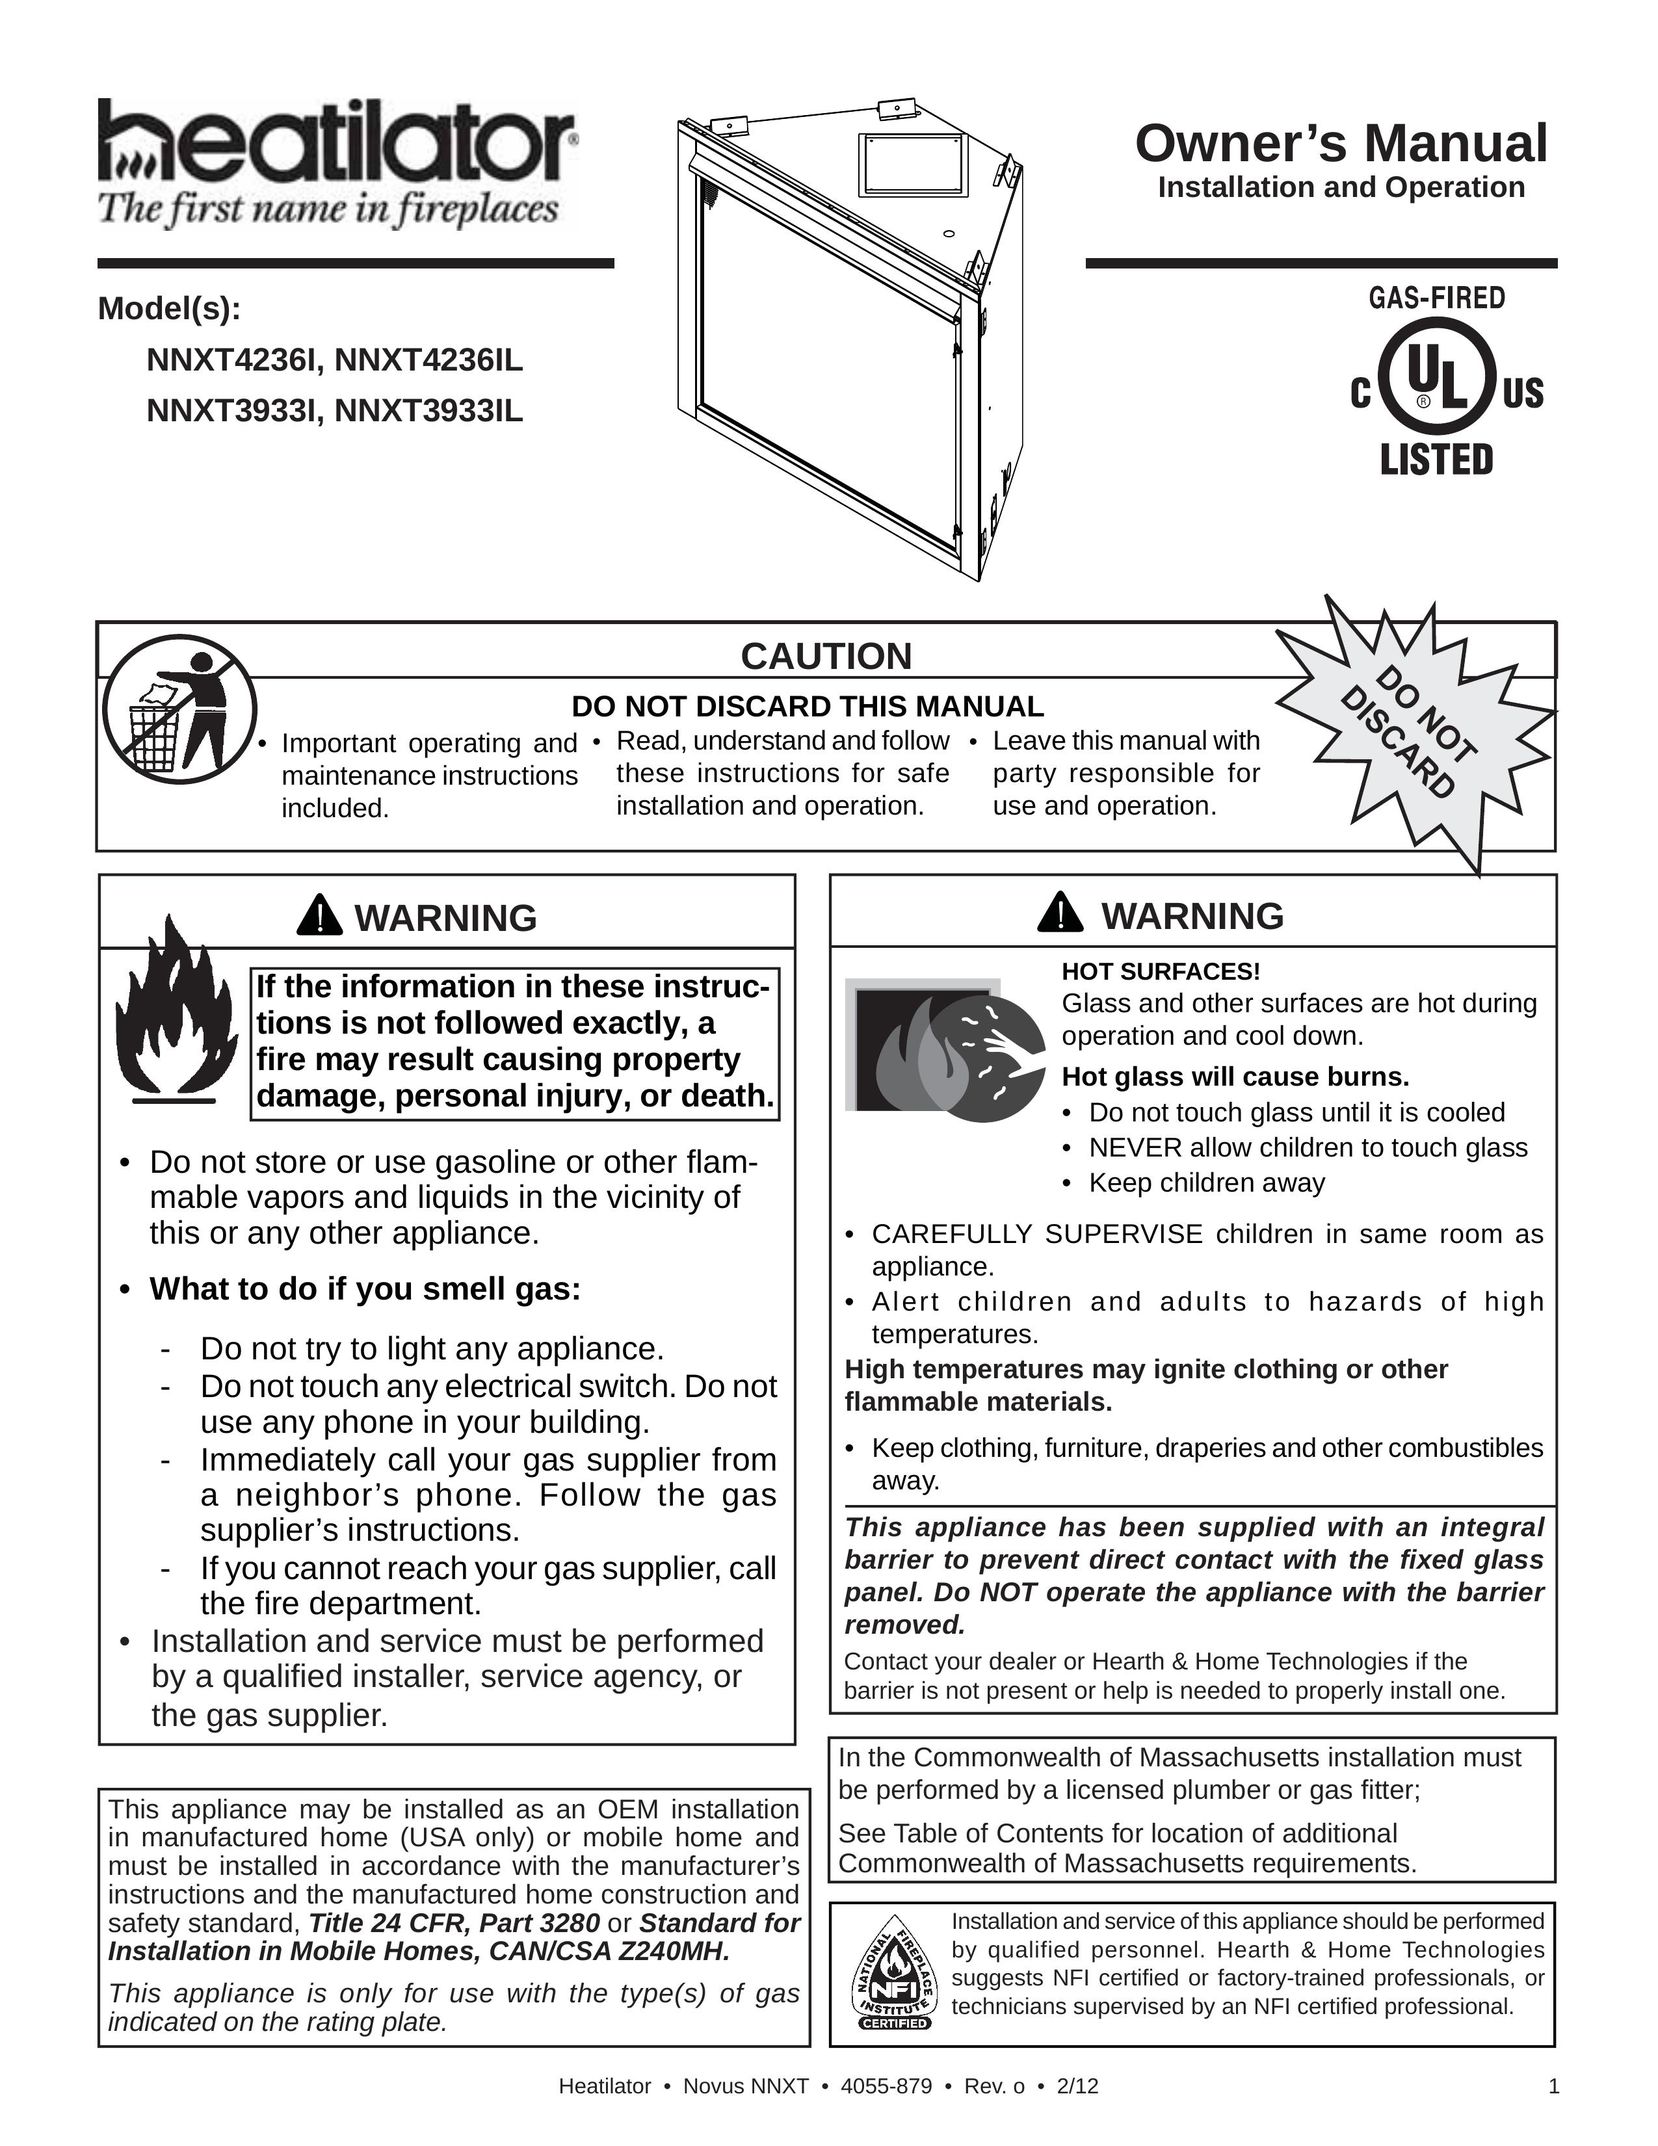 Heatiator NNXT4236I Indoor Fireplace User Manual